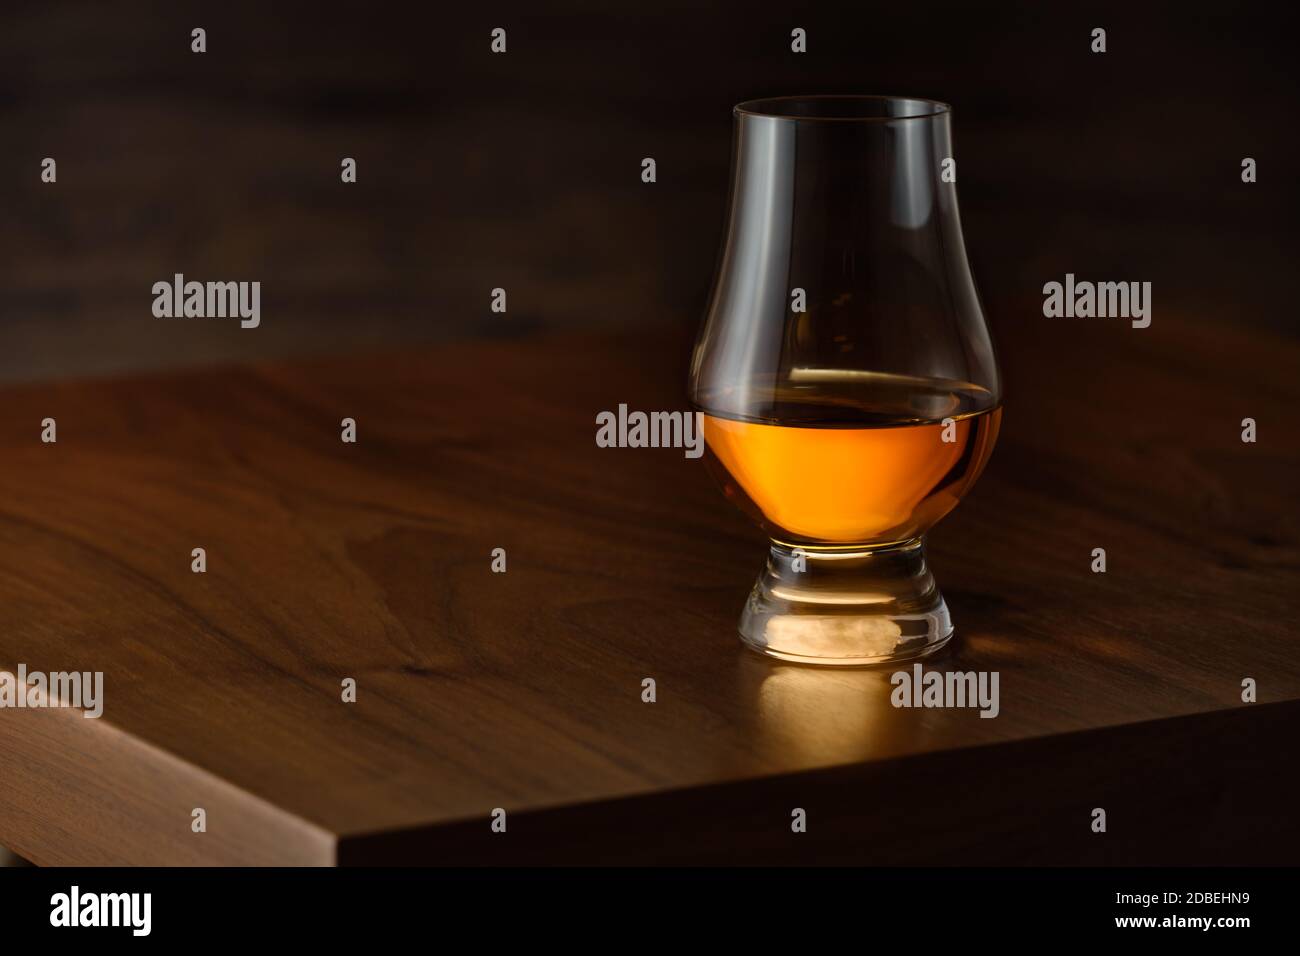 Glencairn glass with scottisch single malt whisky on wooden taböe Stock Photo